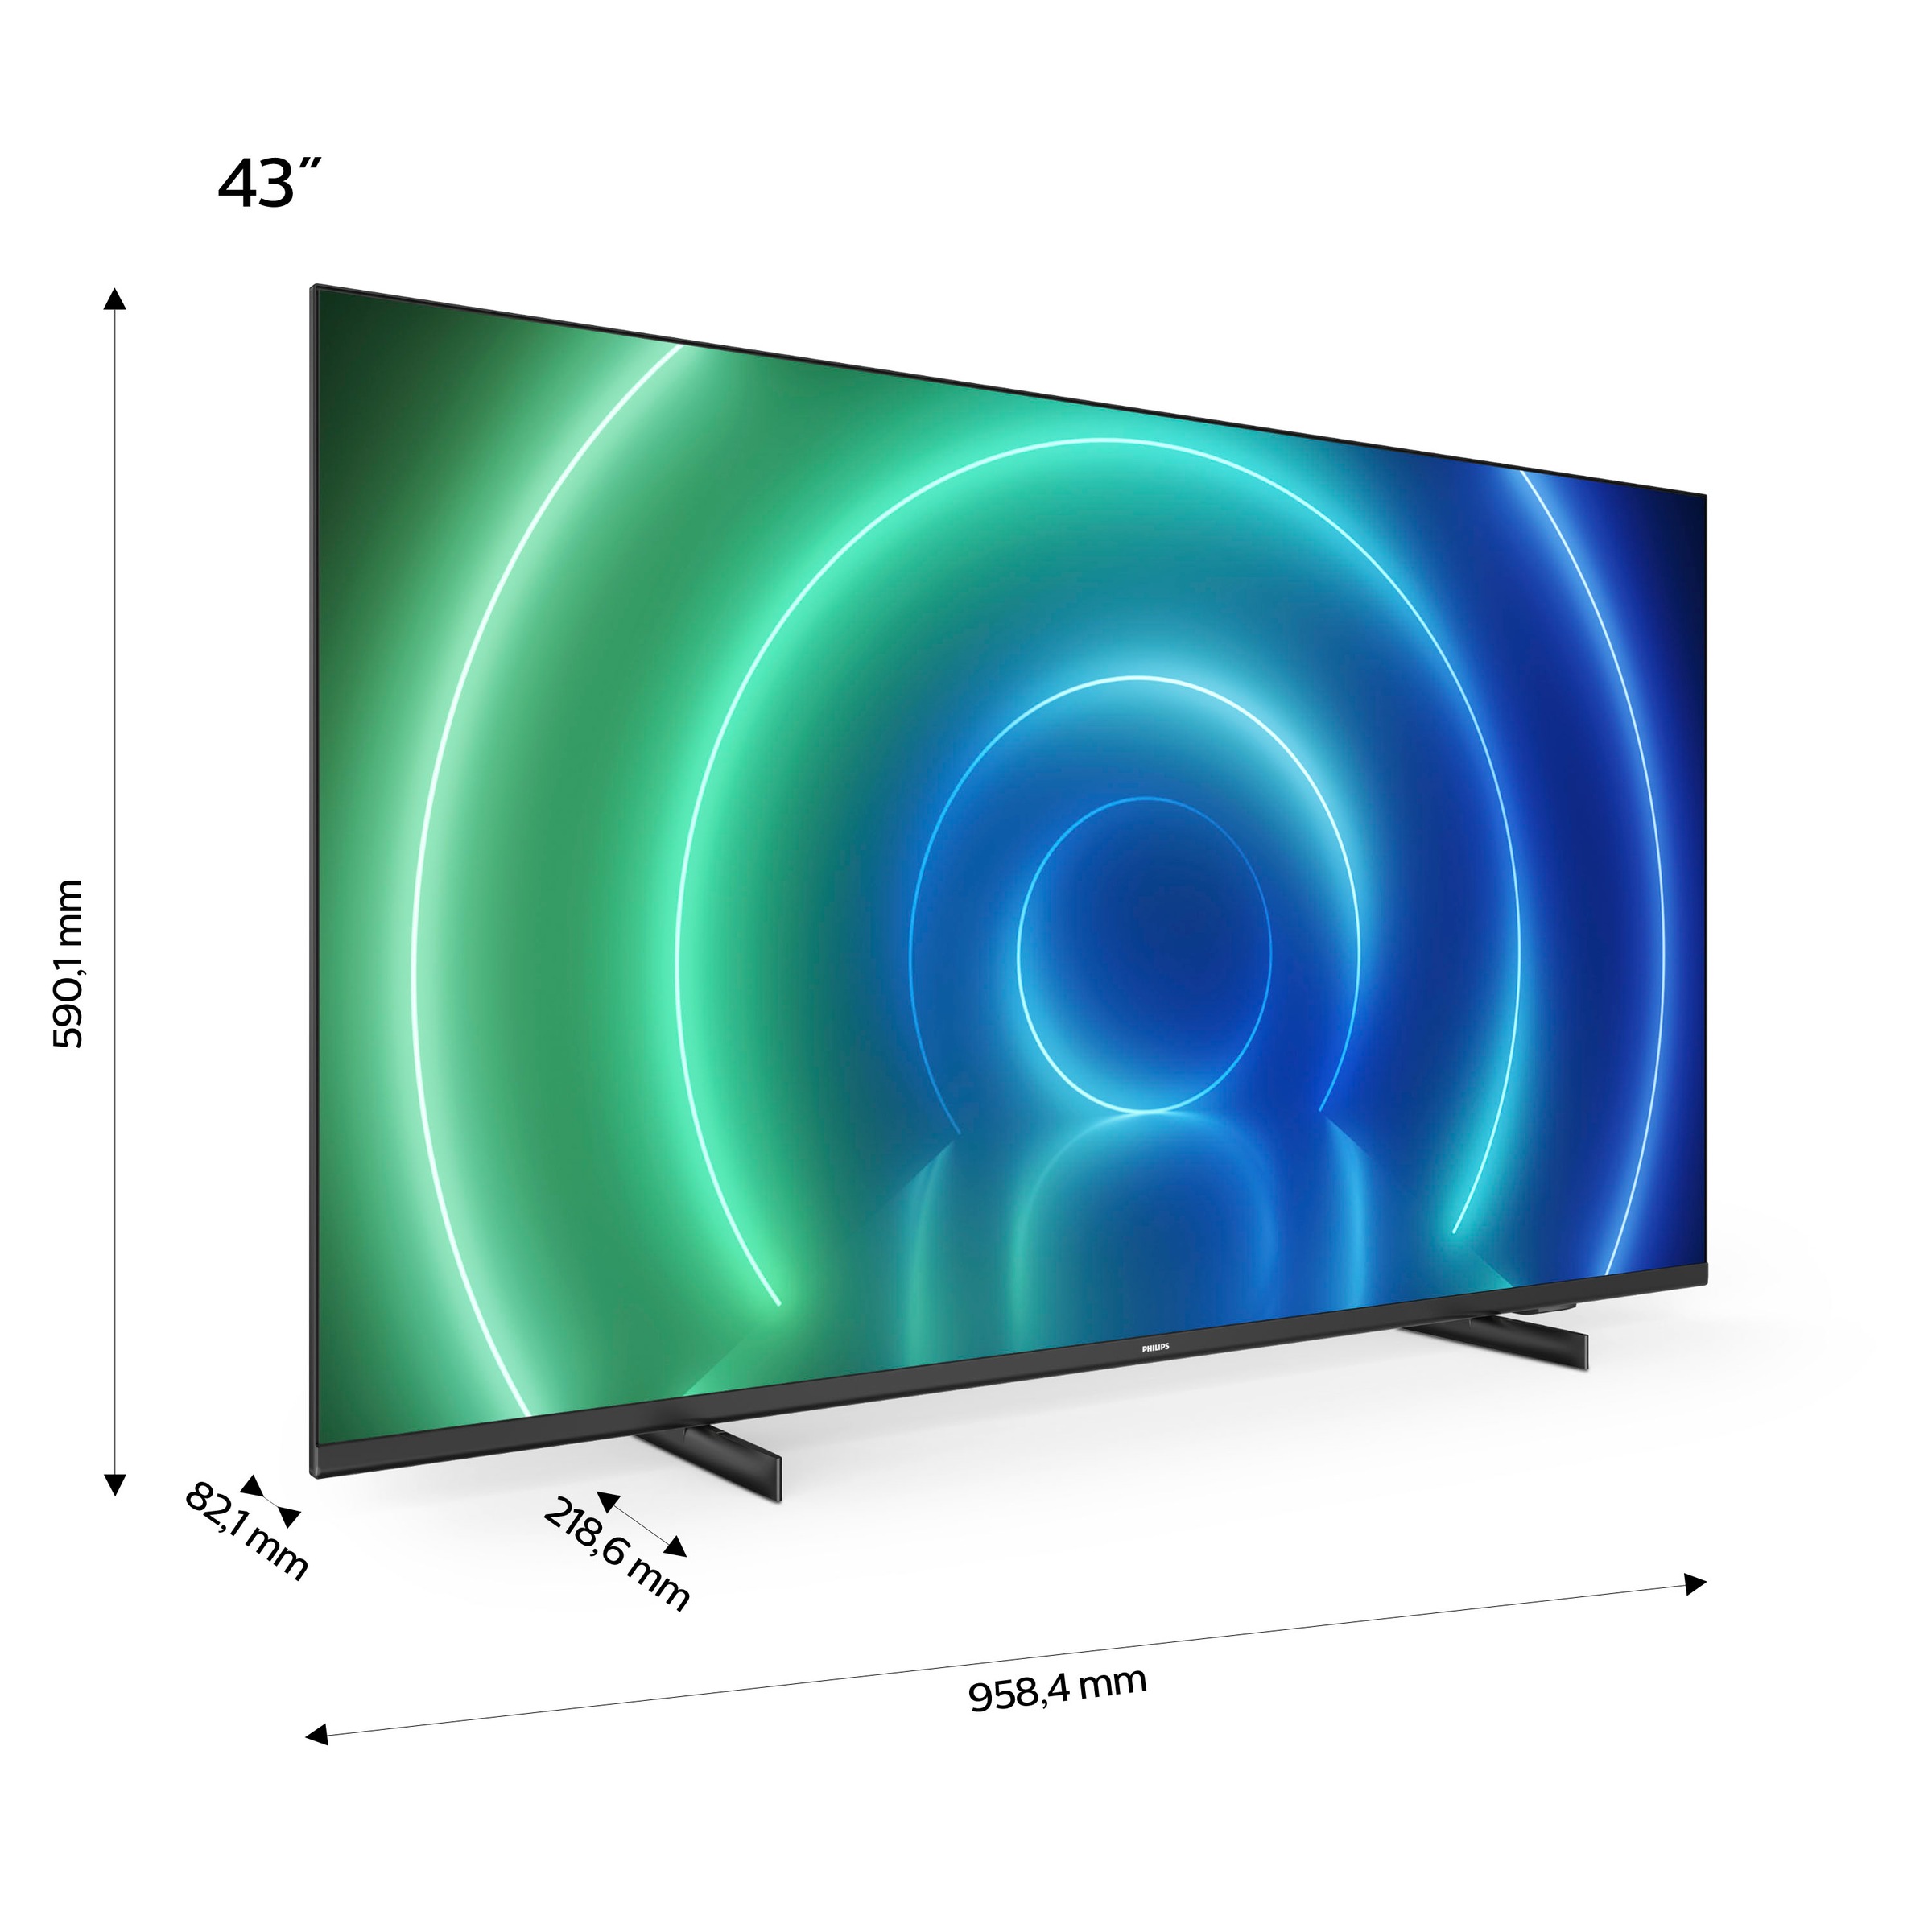 Philips LED-Fernseher, 108 cm/43 Zoll, 4K Ultra HD, Smart-TV, HDR10+ kompatibel, 60 Hz, Dolby Vision & Atmos, Smart TV, Triple Tuner